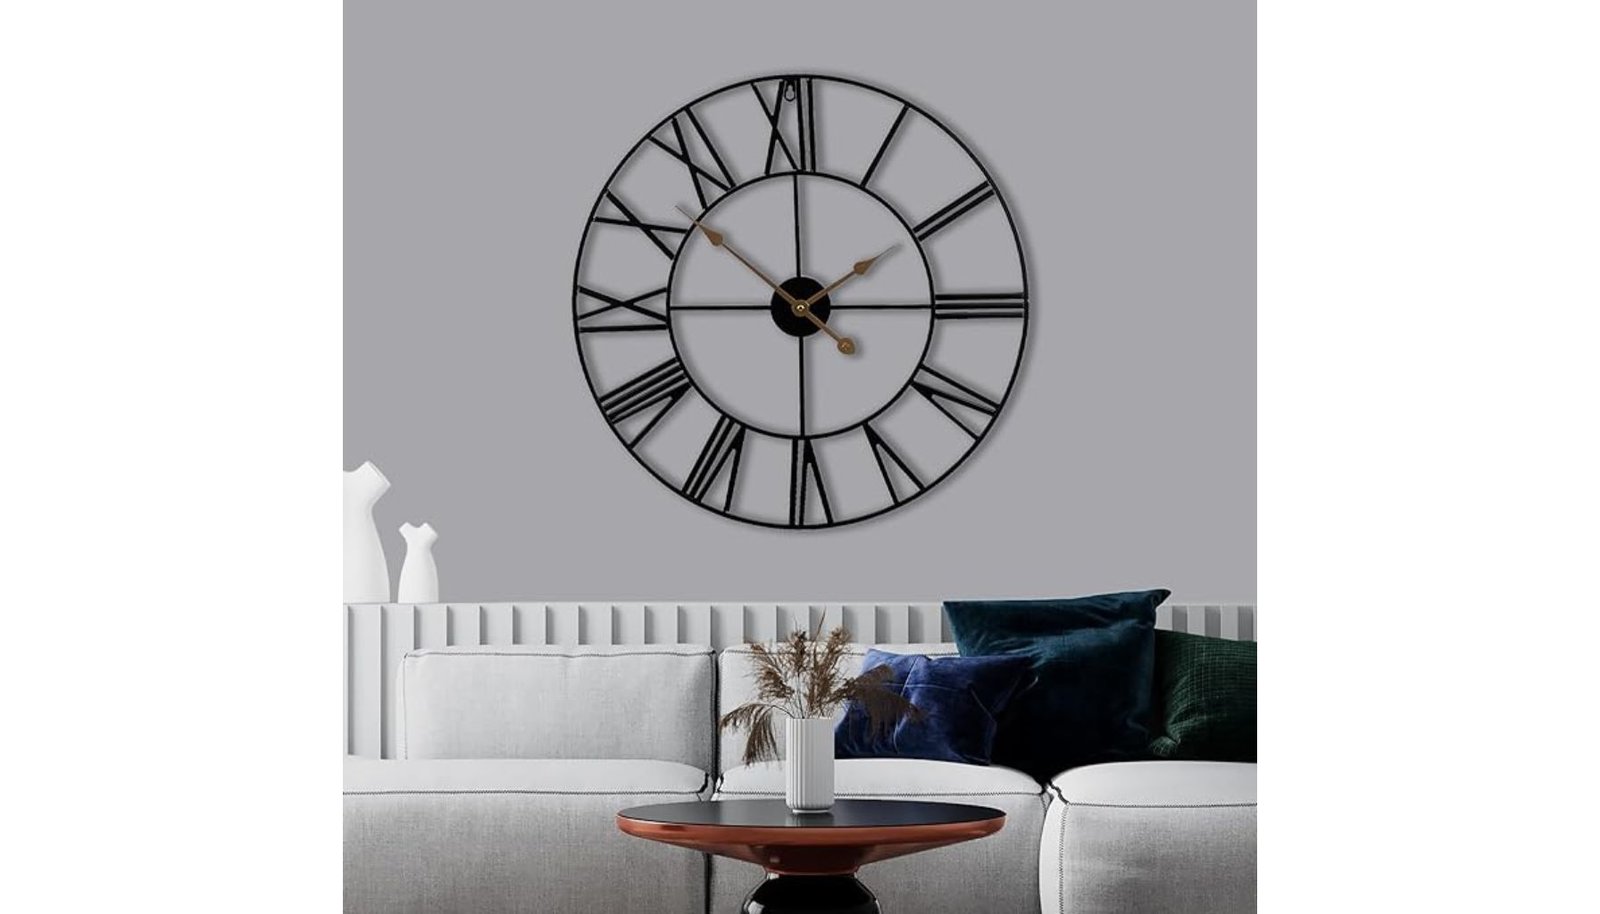 Sorbus Large Wall Clock Review